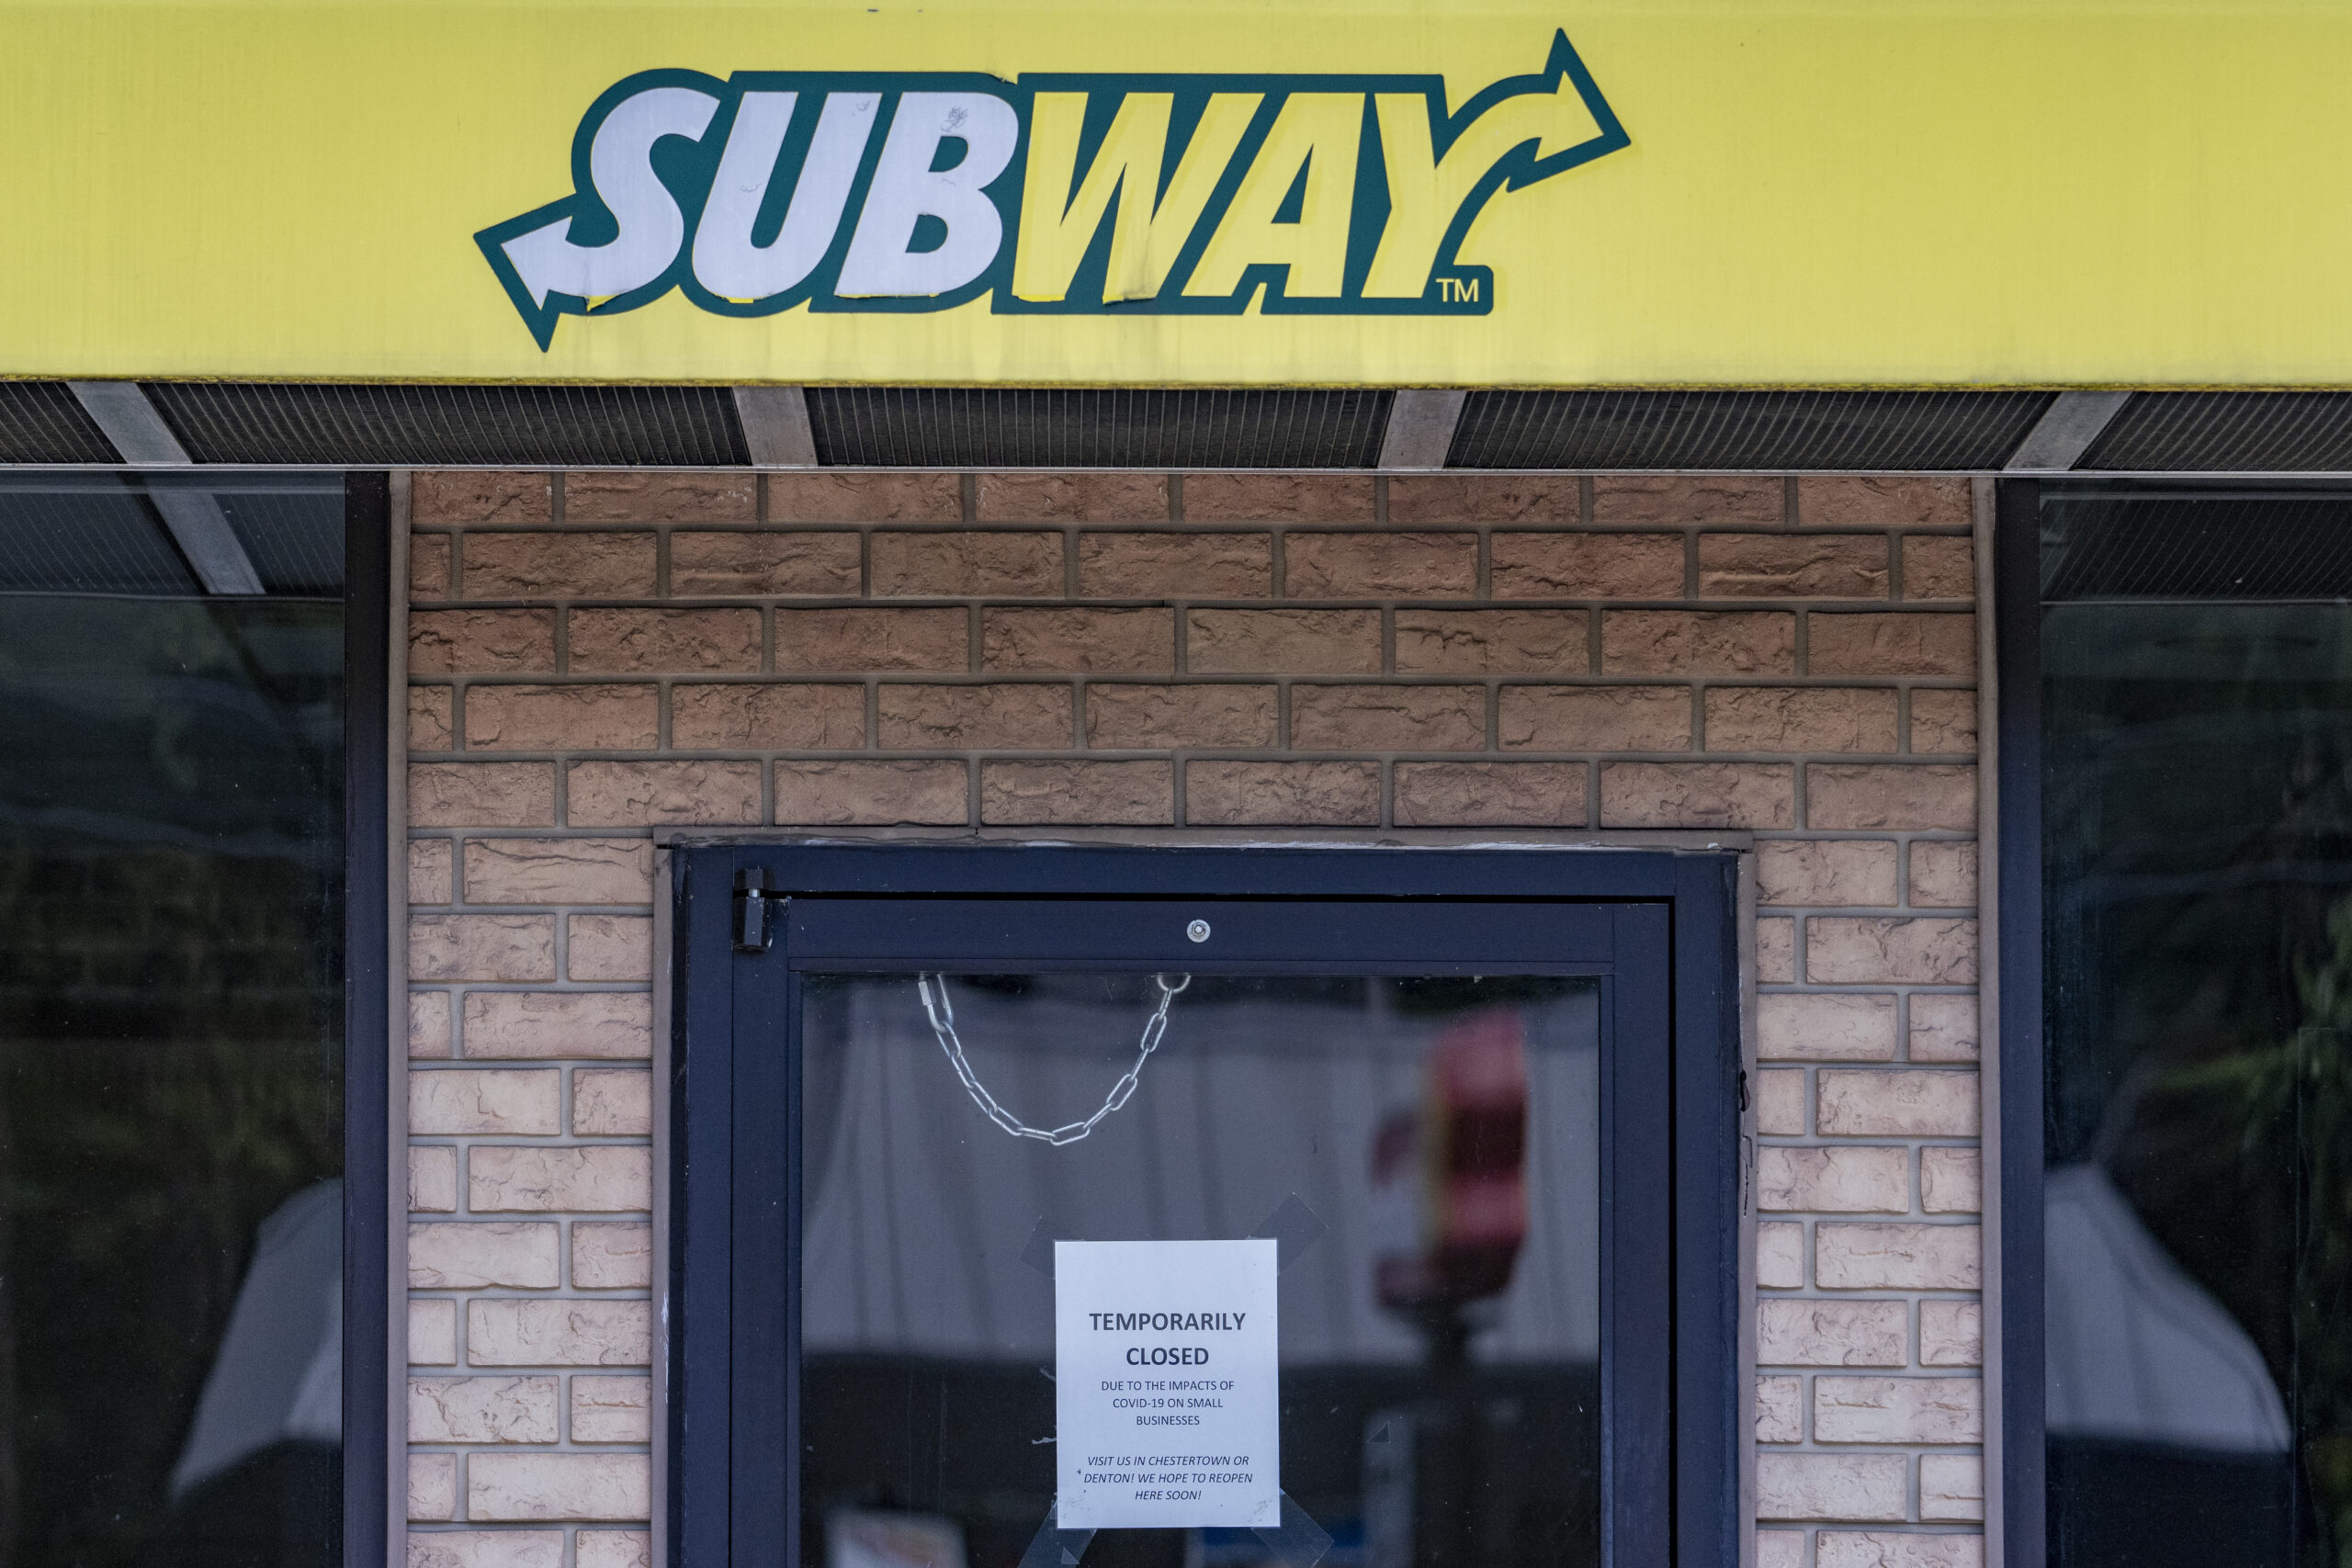 Subway sandwich chain